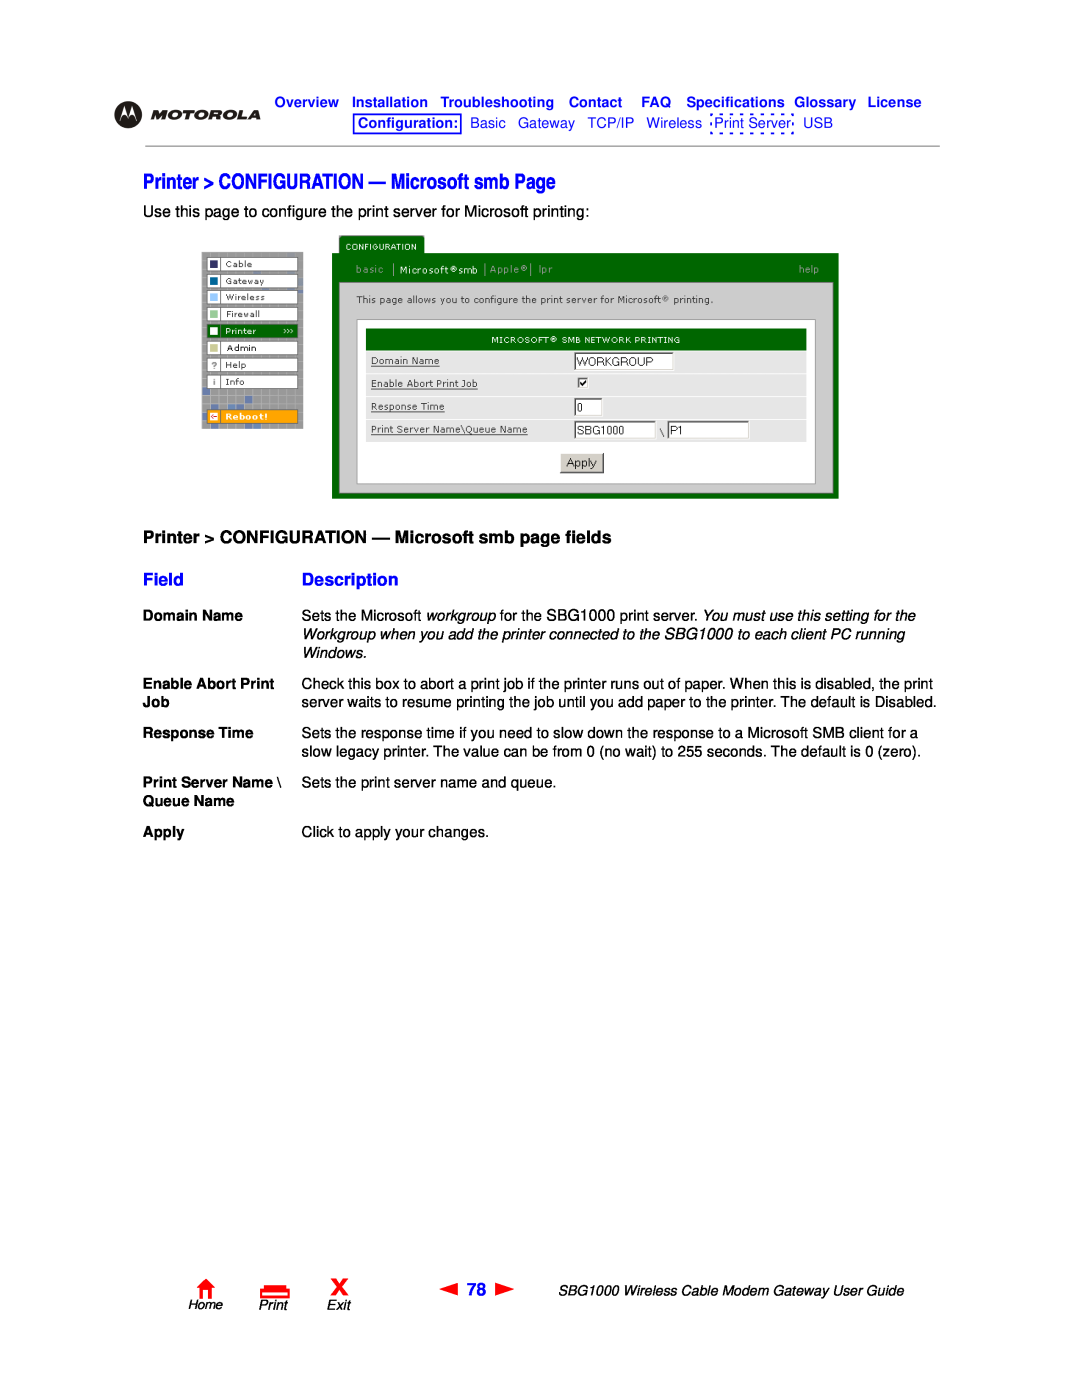 Motorola SBG1000 Printer CONFIGURATION - Microsoft smb Page, Printer CONFIGURATION - Microsoft smb page fields, Field 